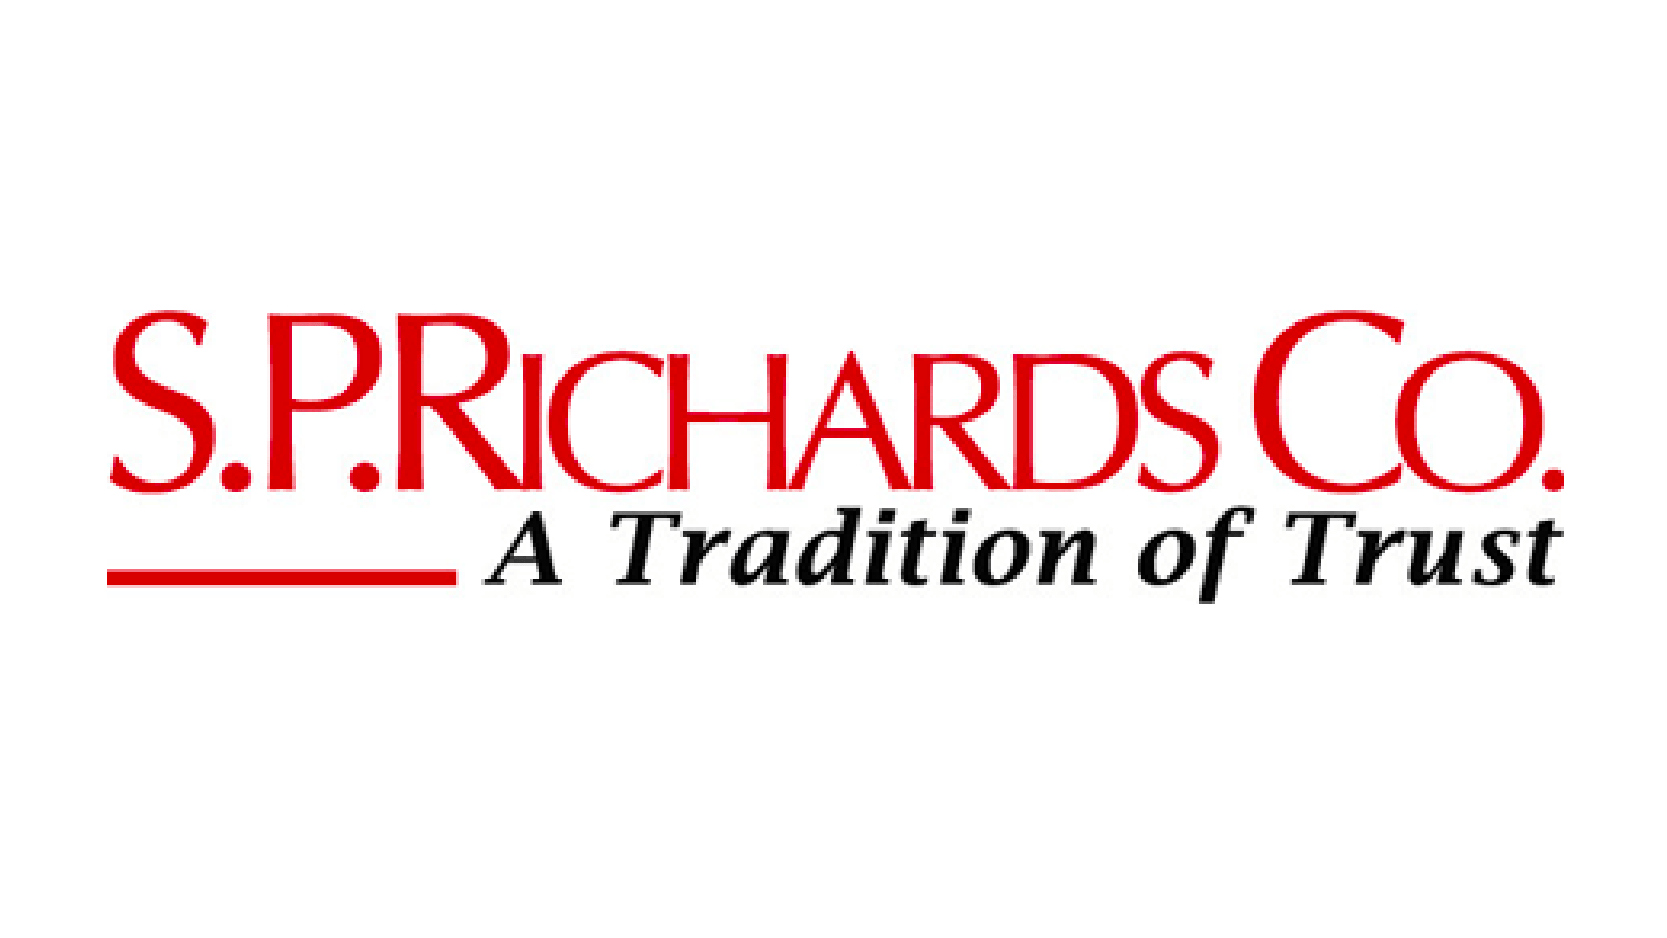 SP Richards Co